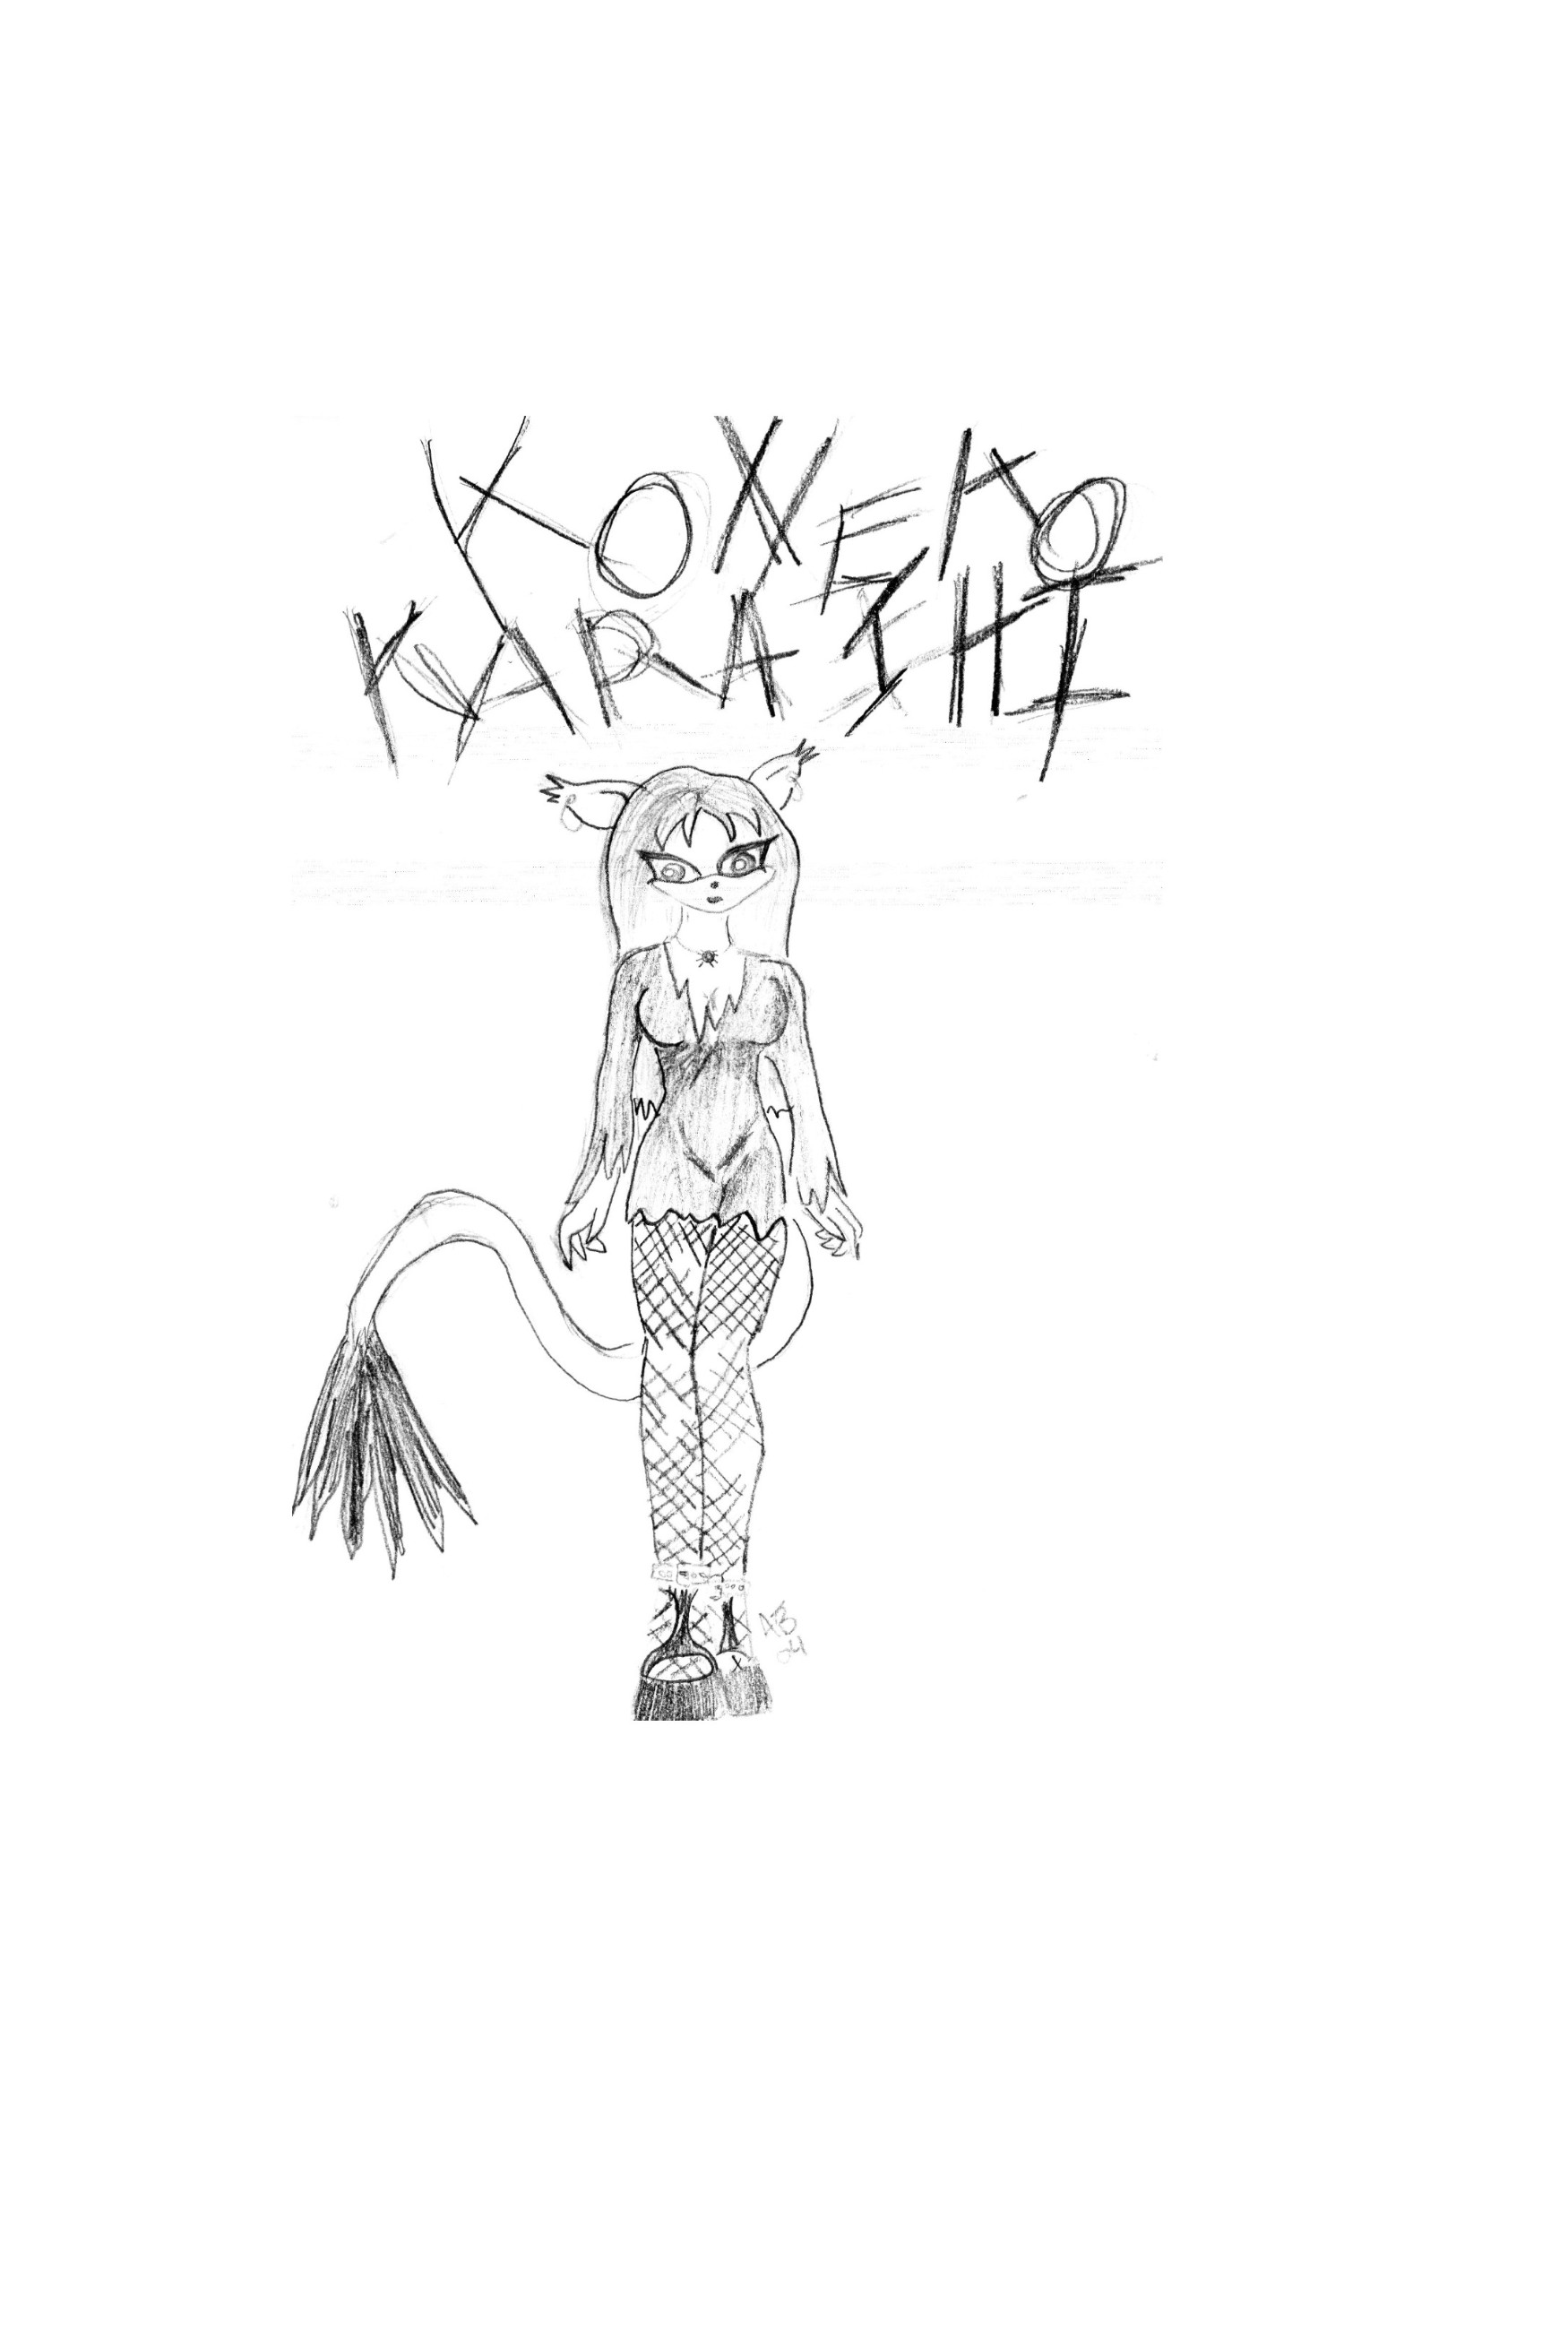 Koneko Kara Shi by bad_kitty